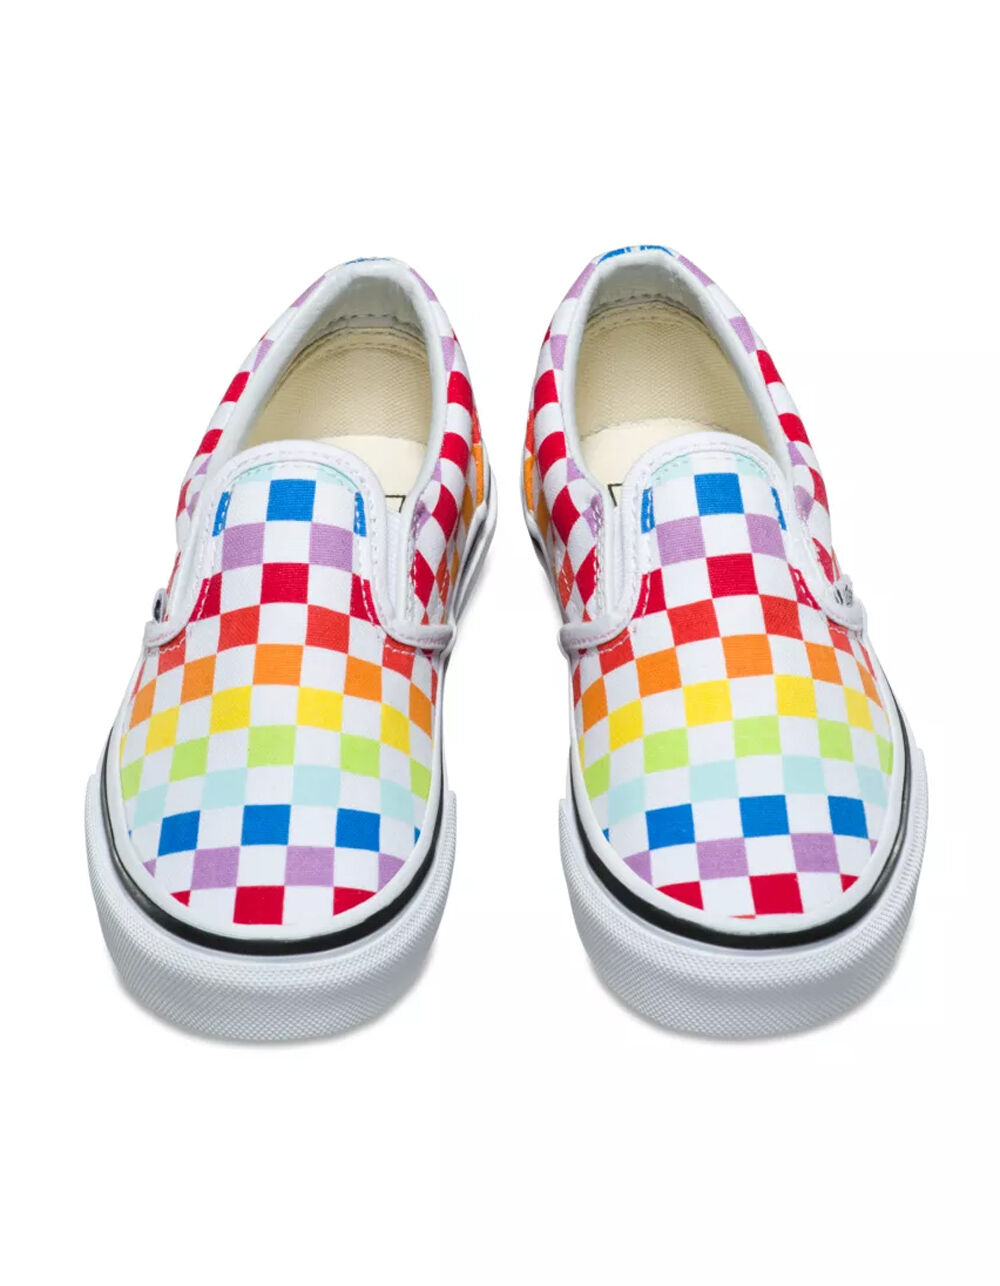 VANS Rainbow Classic Slip-On Kids Shoes image number 5